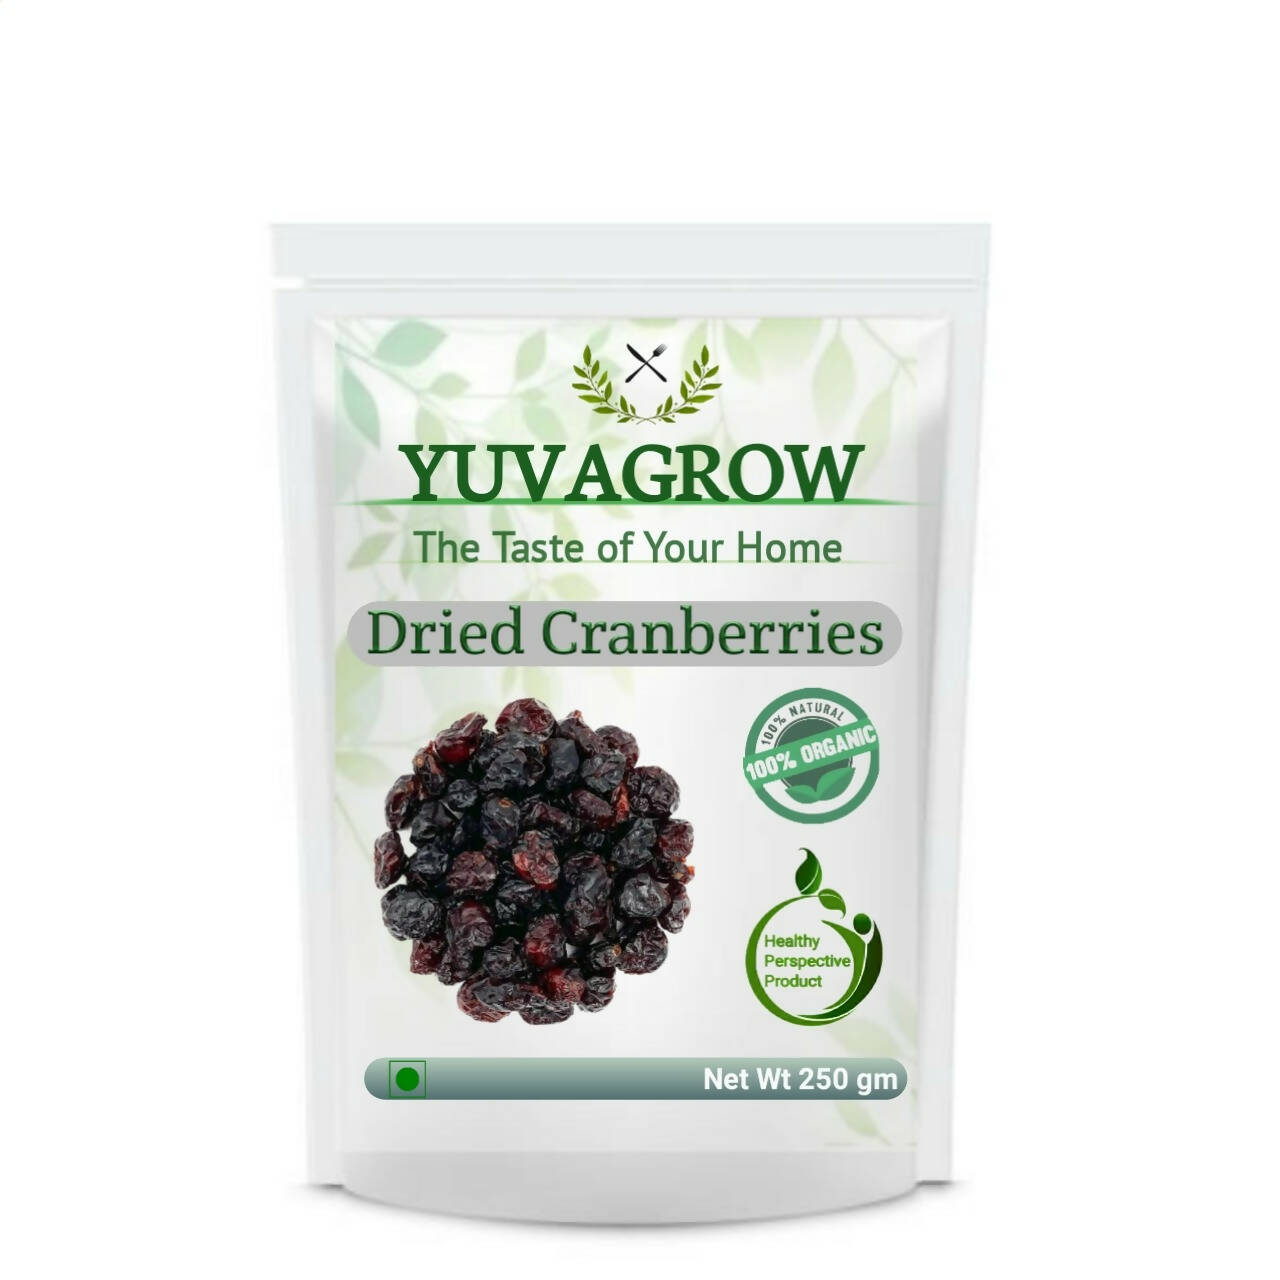 Yuvagrow Dried Cranberries - buy in USA, Australia, Canada